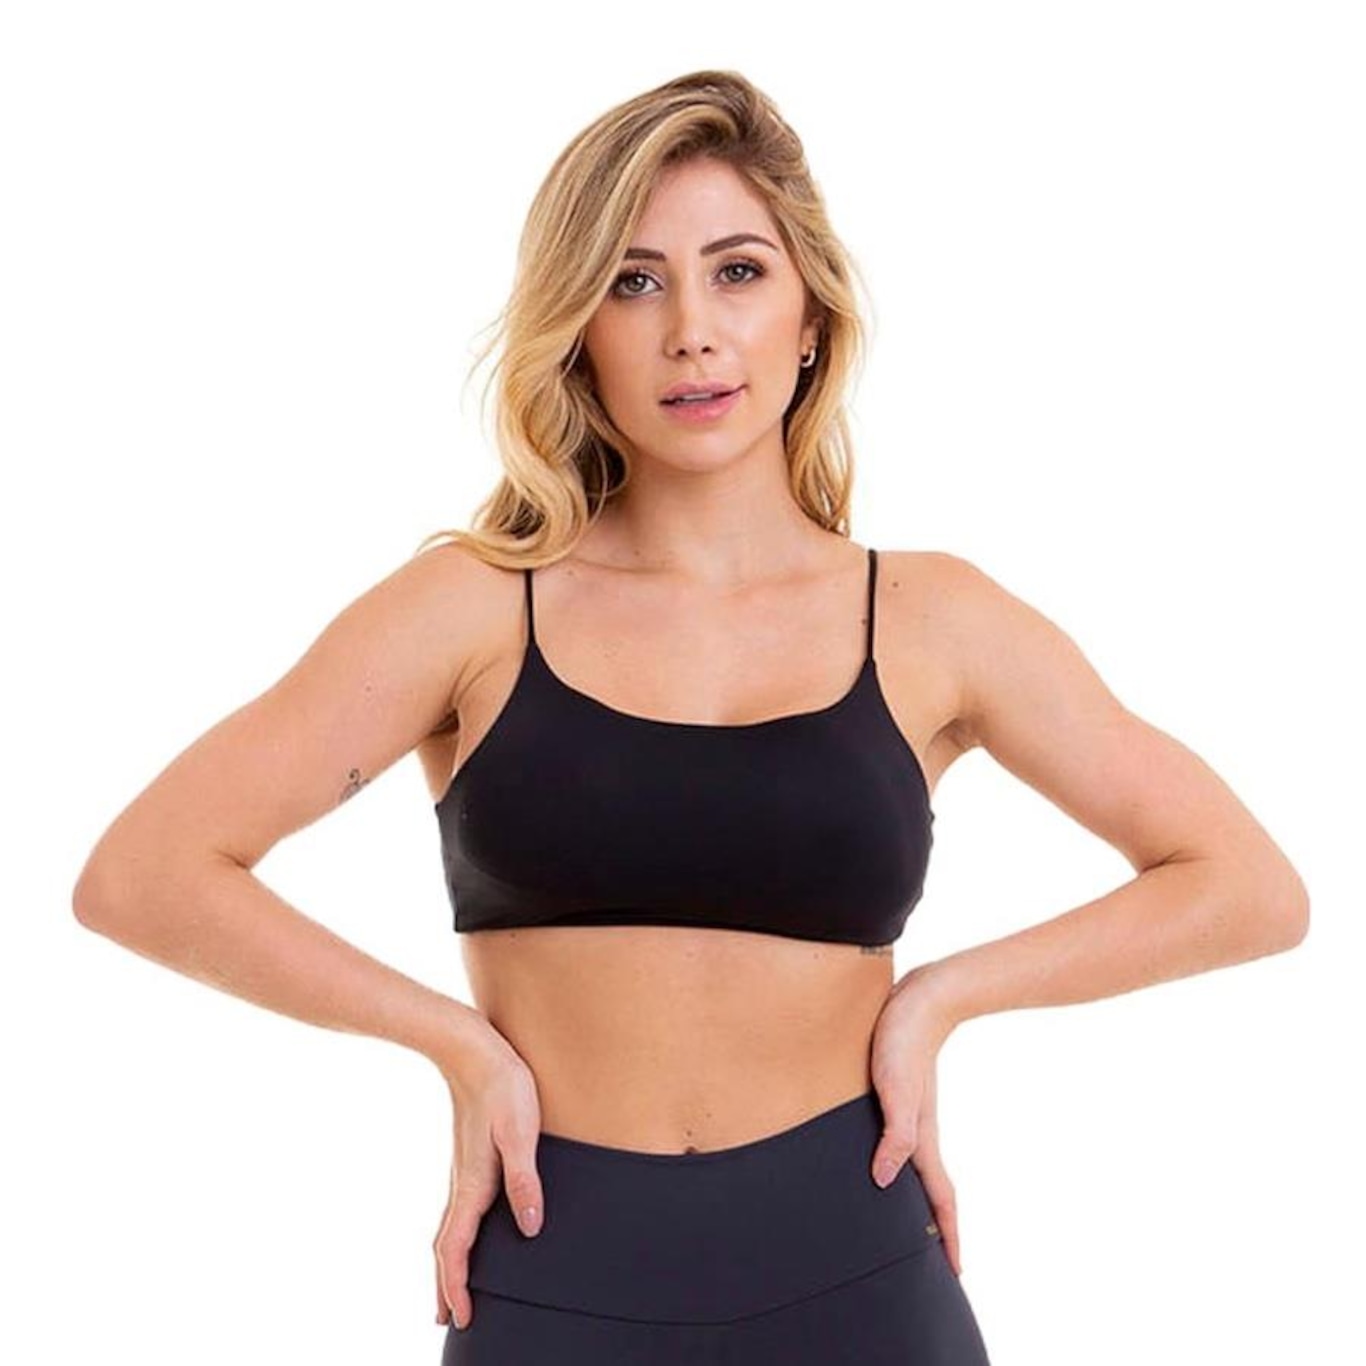 T-shirt Sport Femme Manches Longues RUN Cajubrasil⎜Ezabel Fitness Yoga